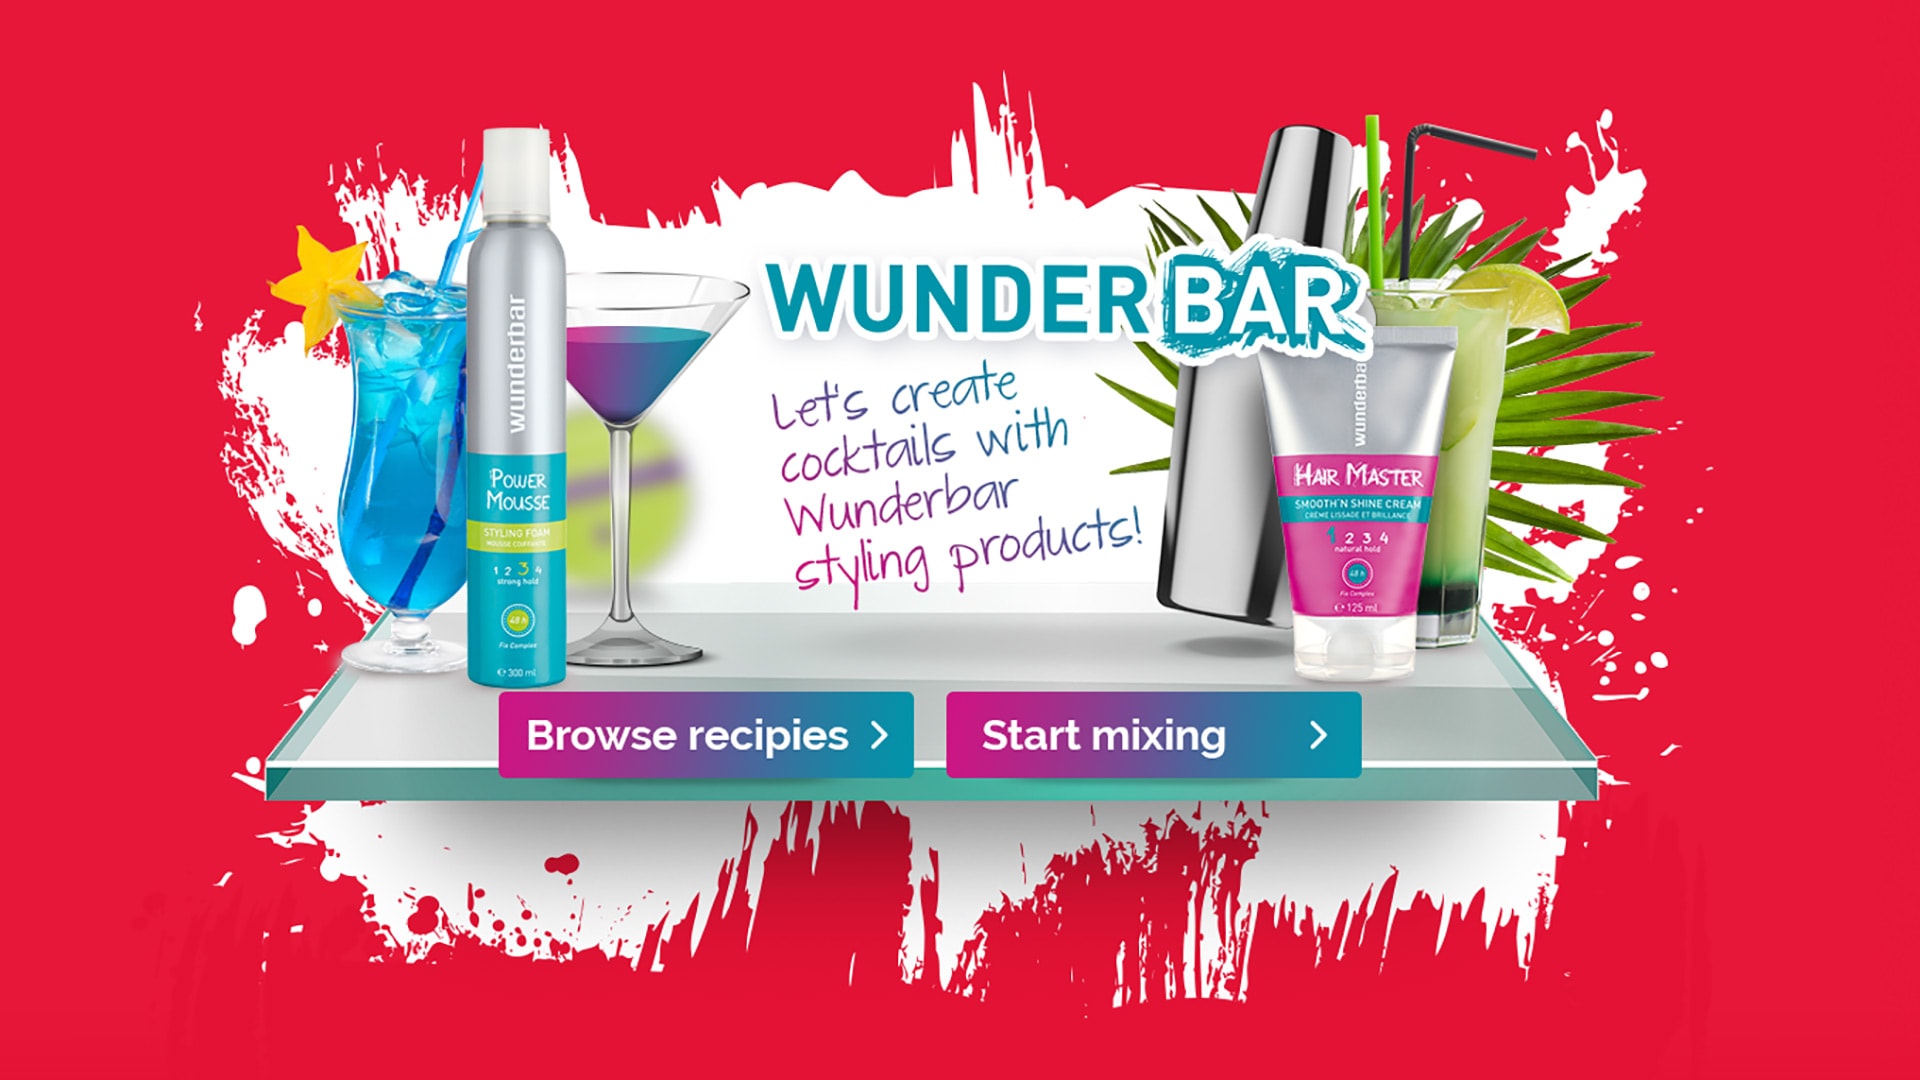 Wunderbar website